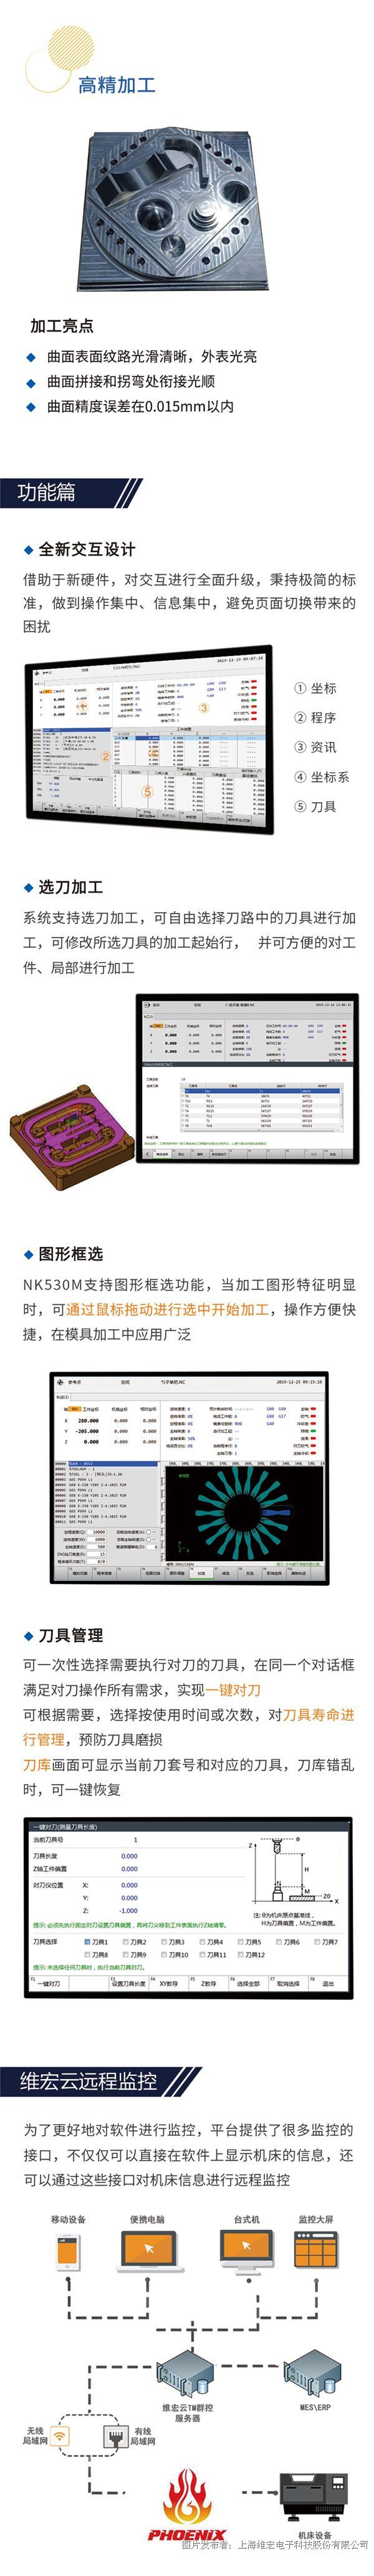 NK530M-加工应用篇_02(1).jpg